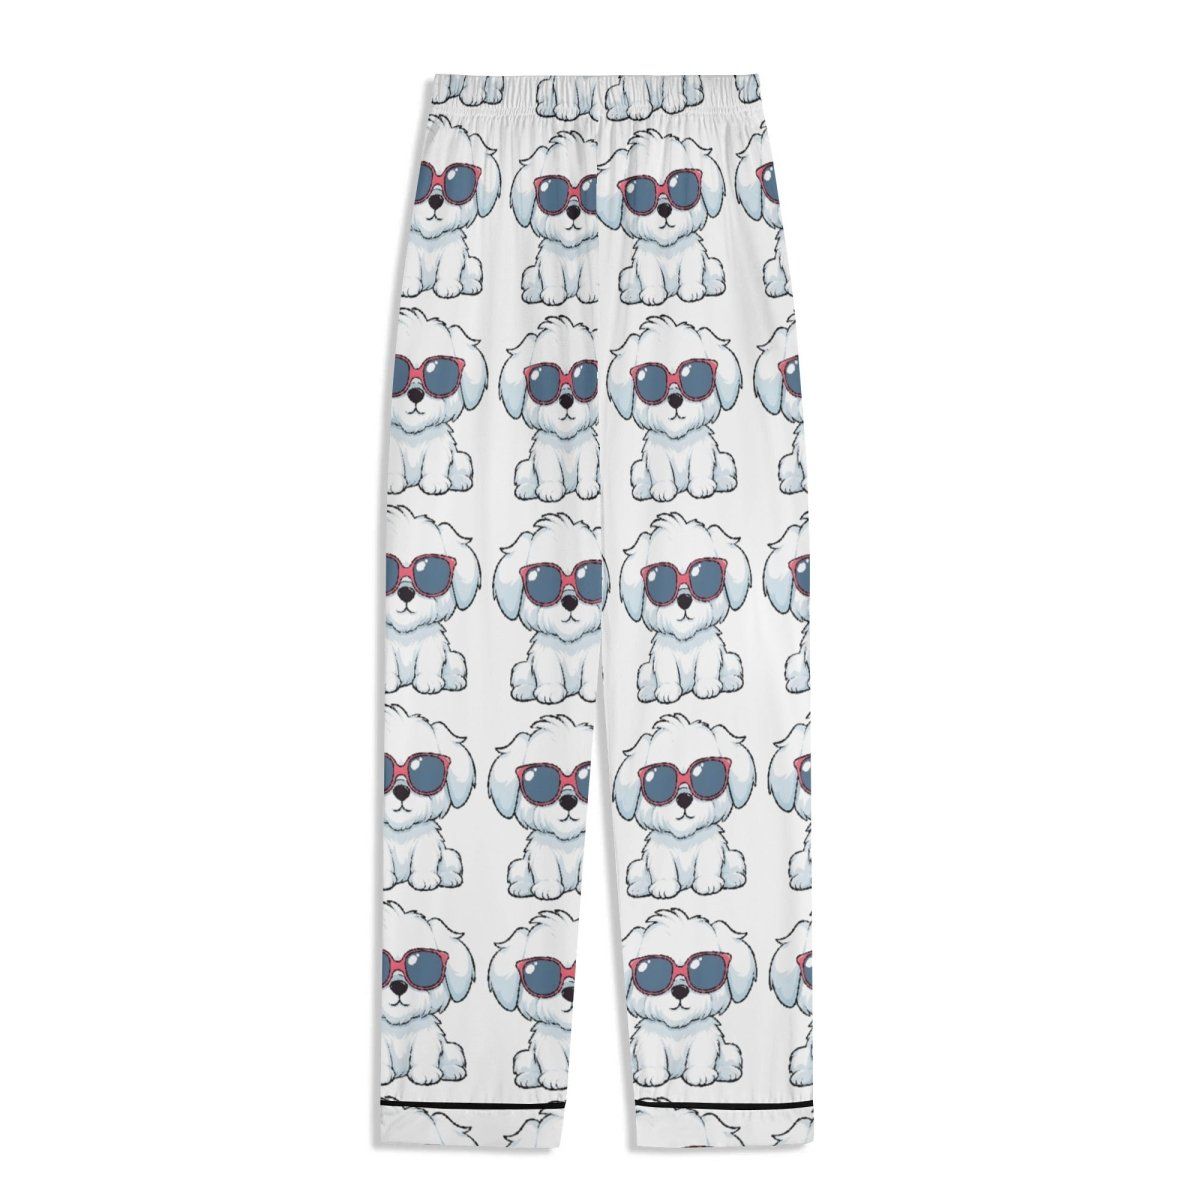 Customizable Hilarious Pajama Set - Iron Phoenix GHG